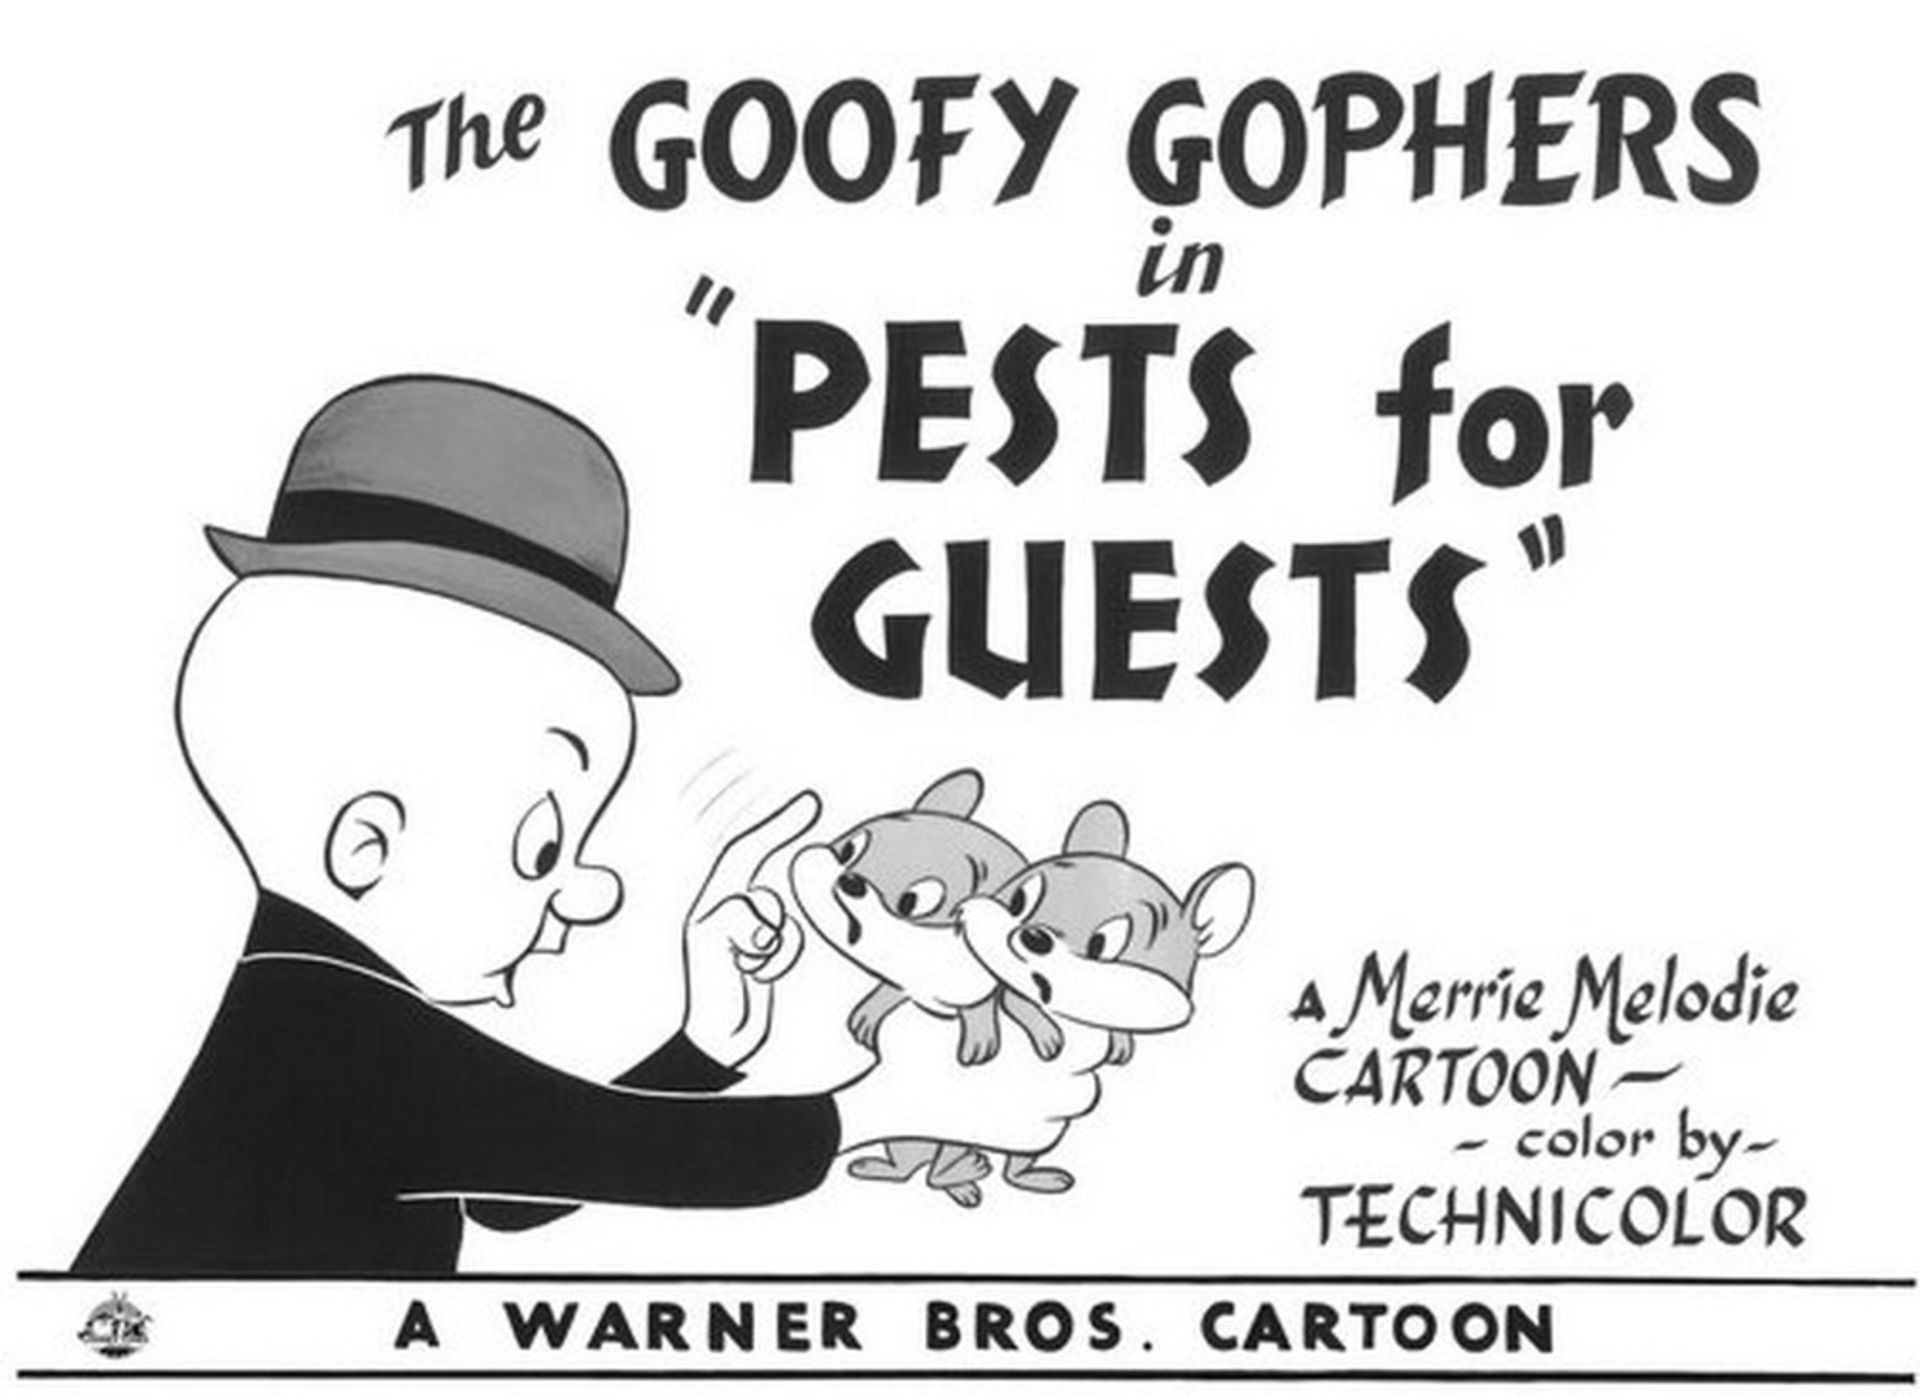 Warner Brothers Hologram Goofy Gophers - Image 2 of 2